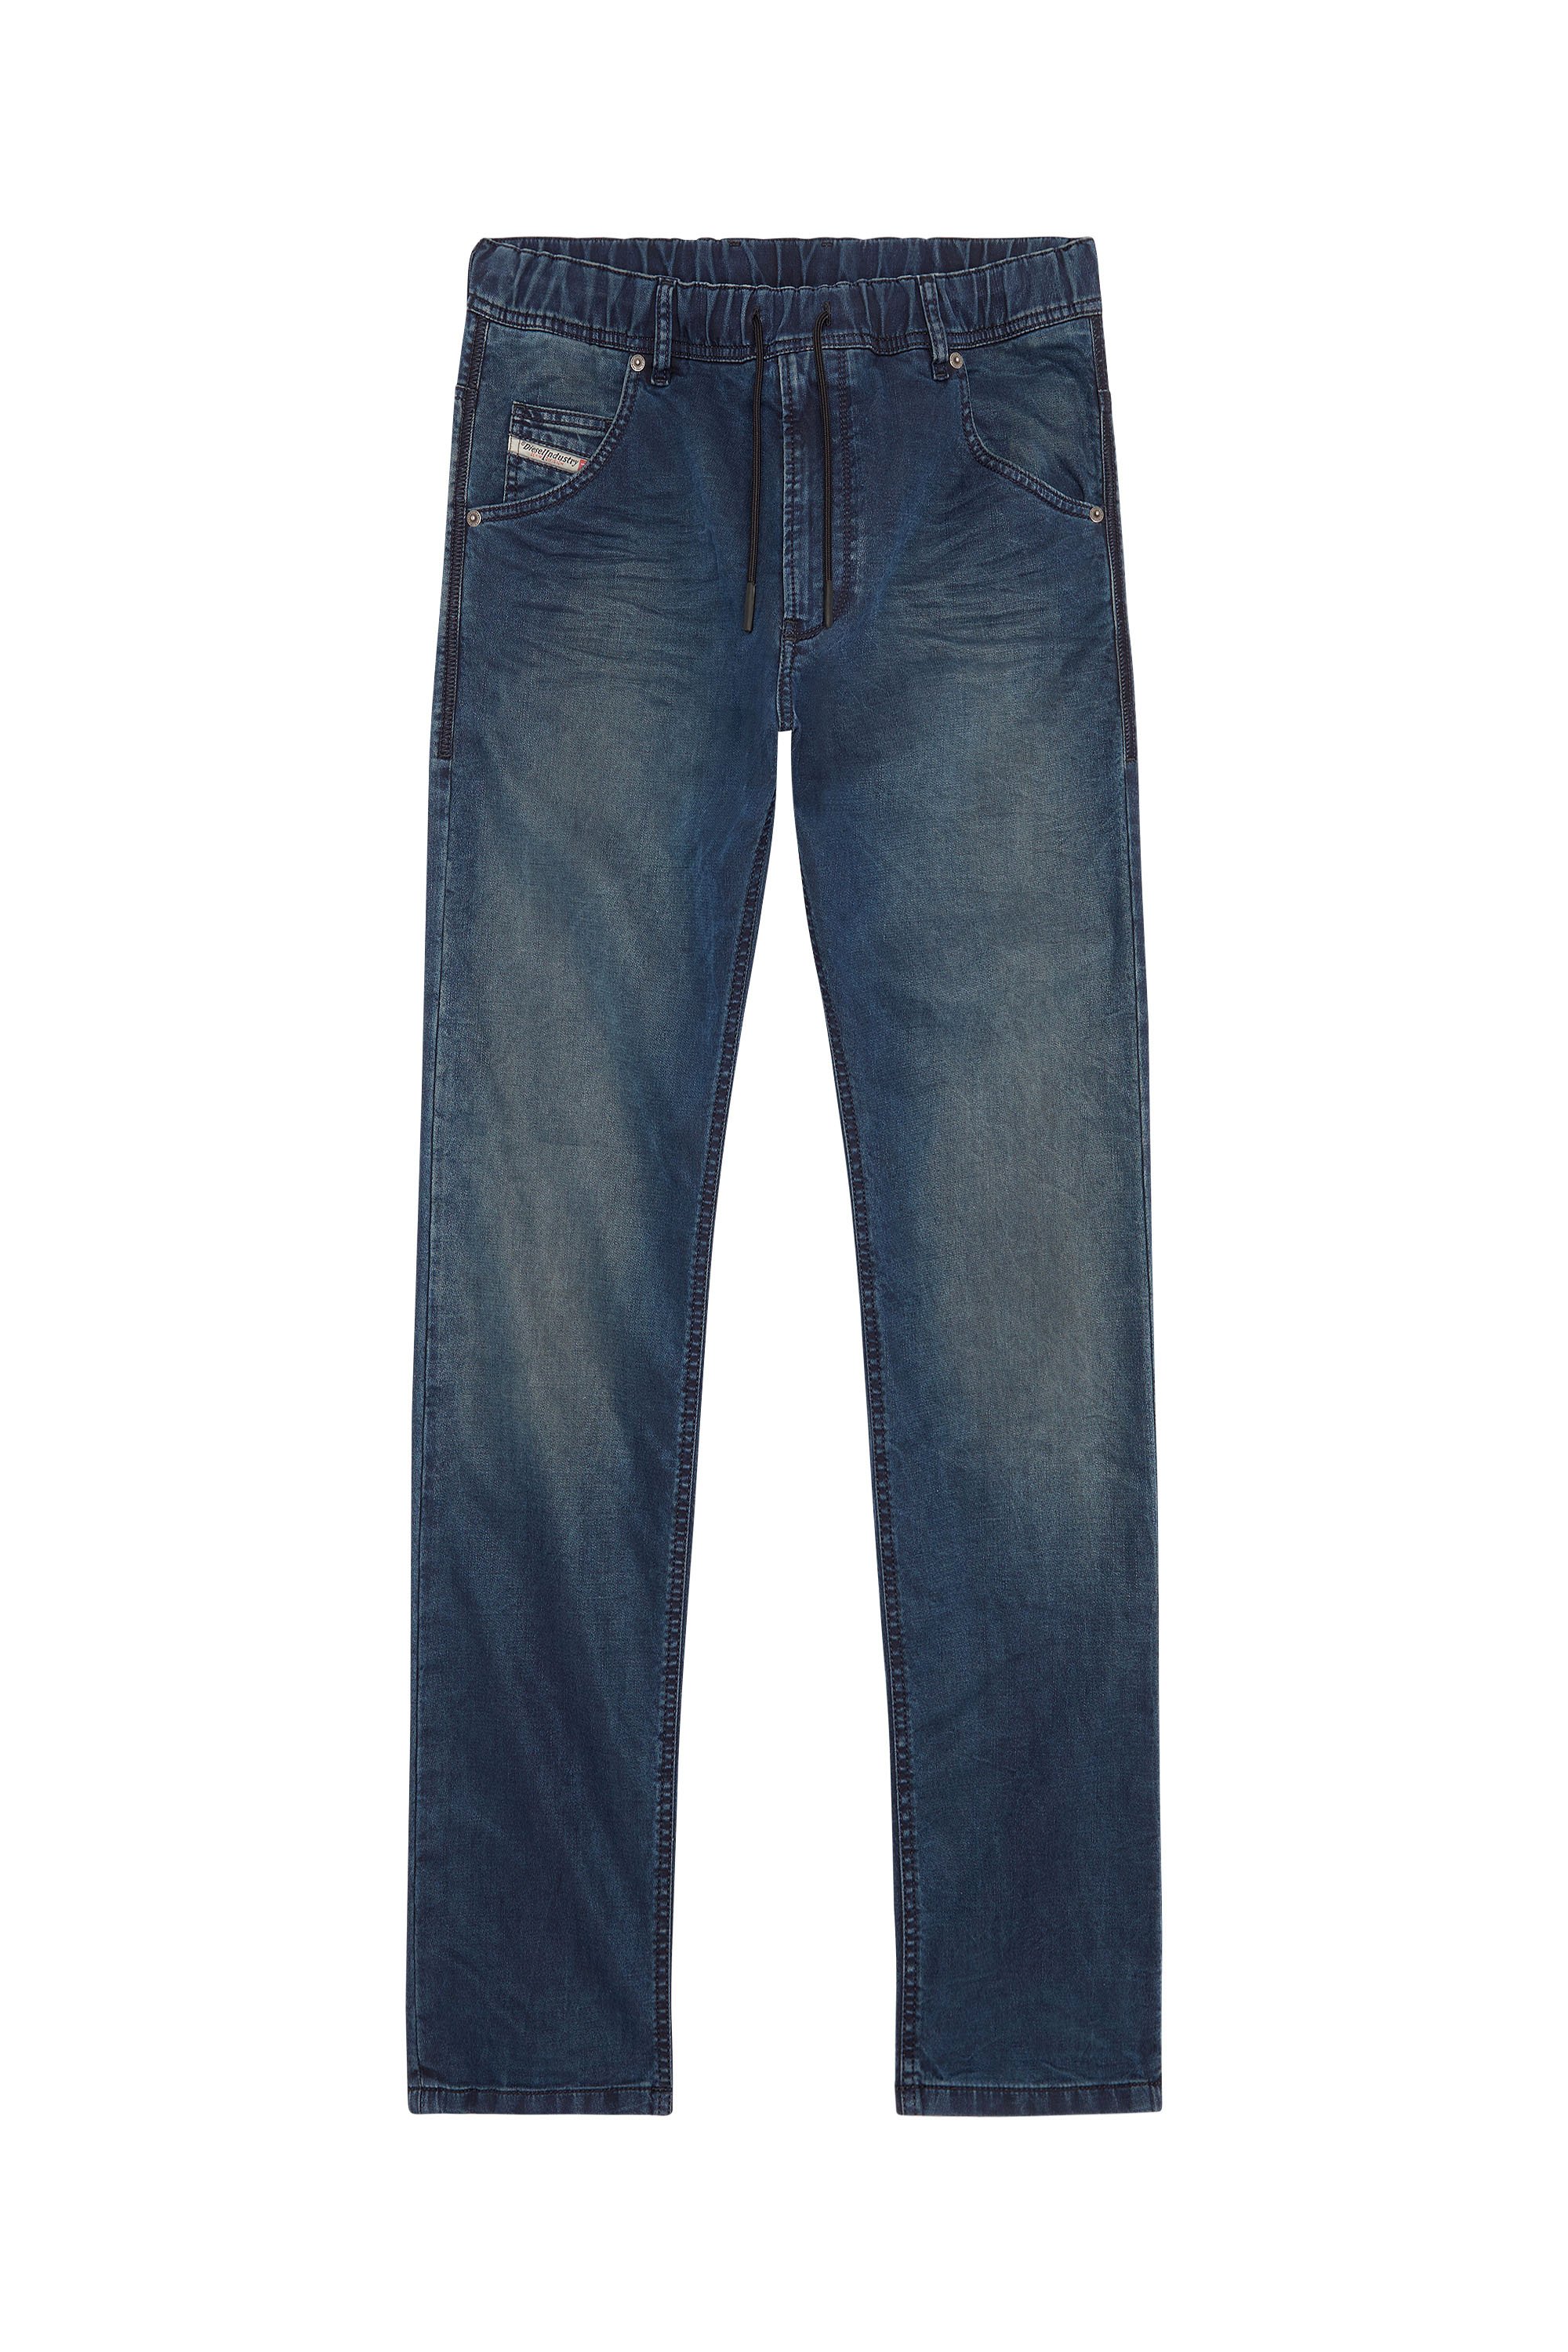 Krooley JoggJeans® 068BC Tapered, Bleu Foncé - Jeans